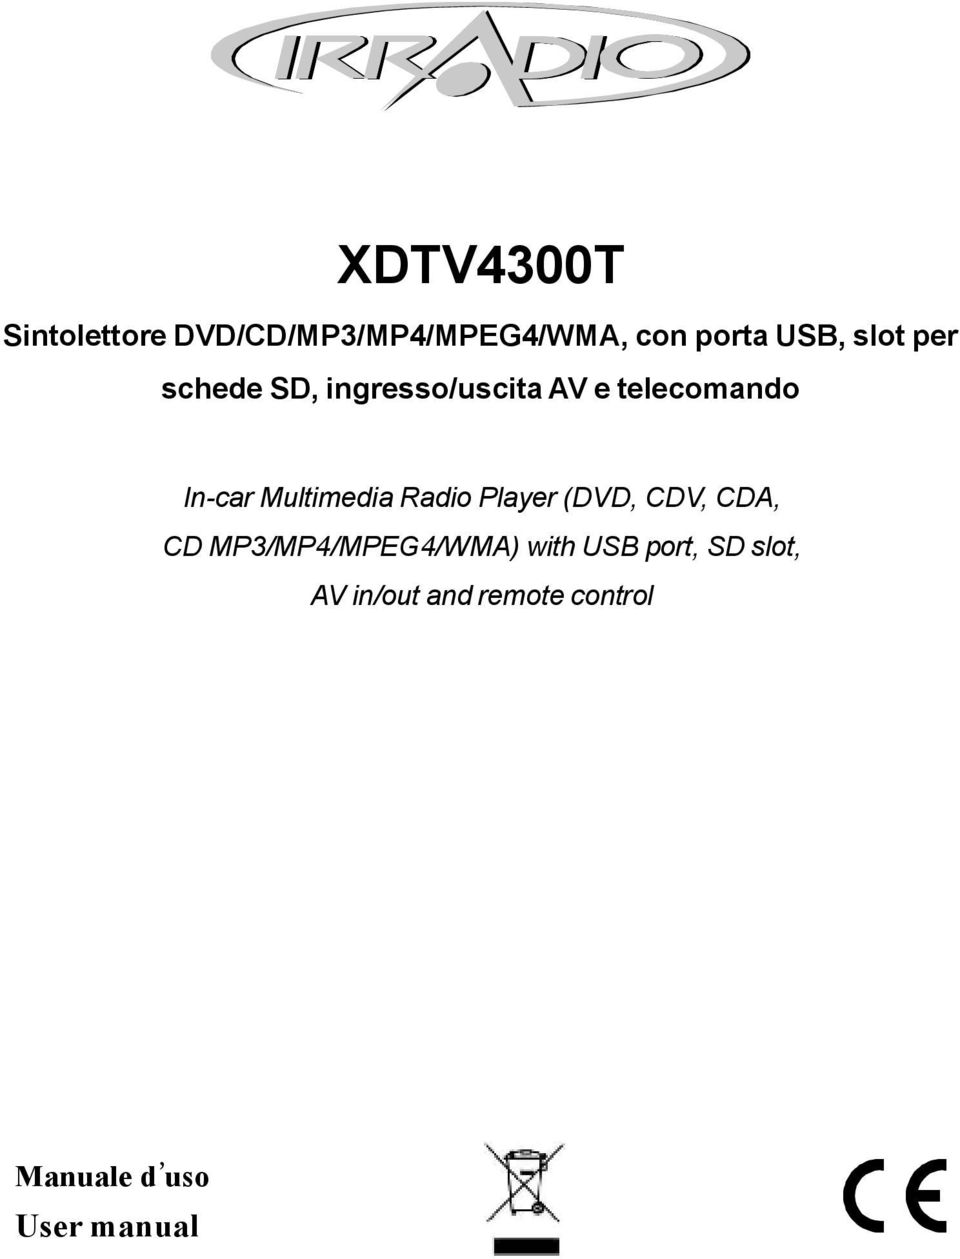 Multimedia Radio Player (DVD, CDV, CDA, CD MP3/MP4/MPEG4/WMA) with